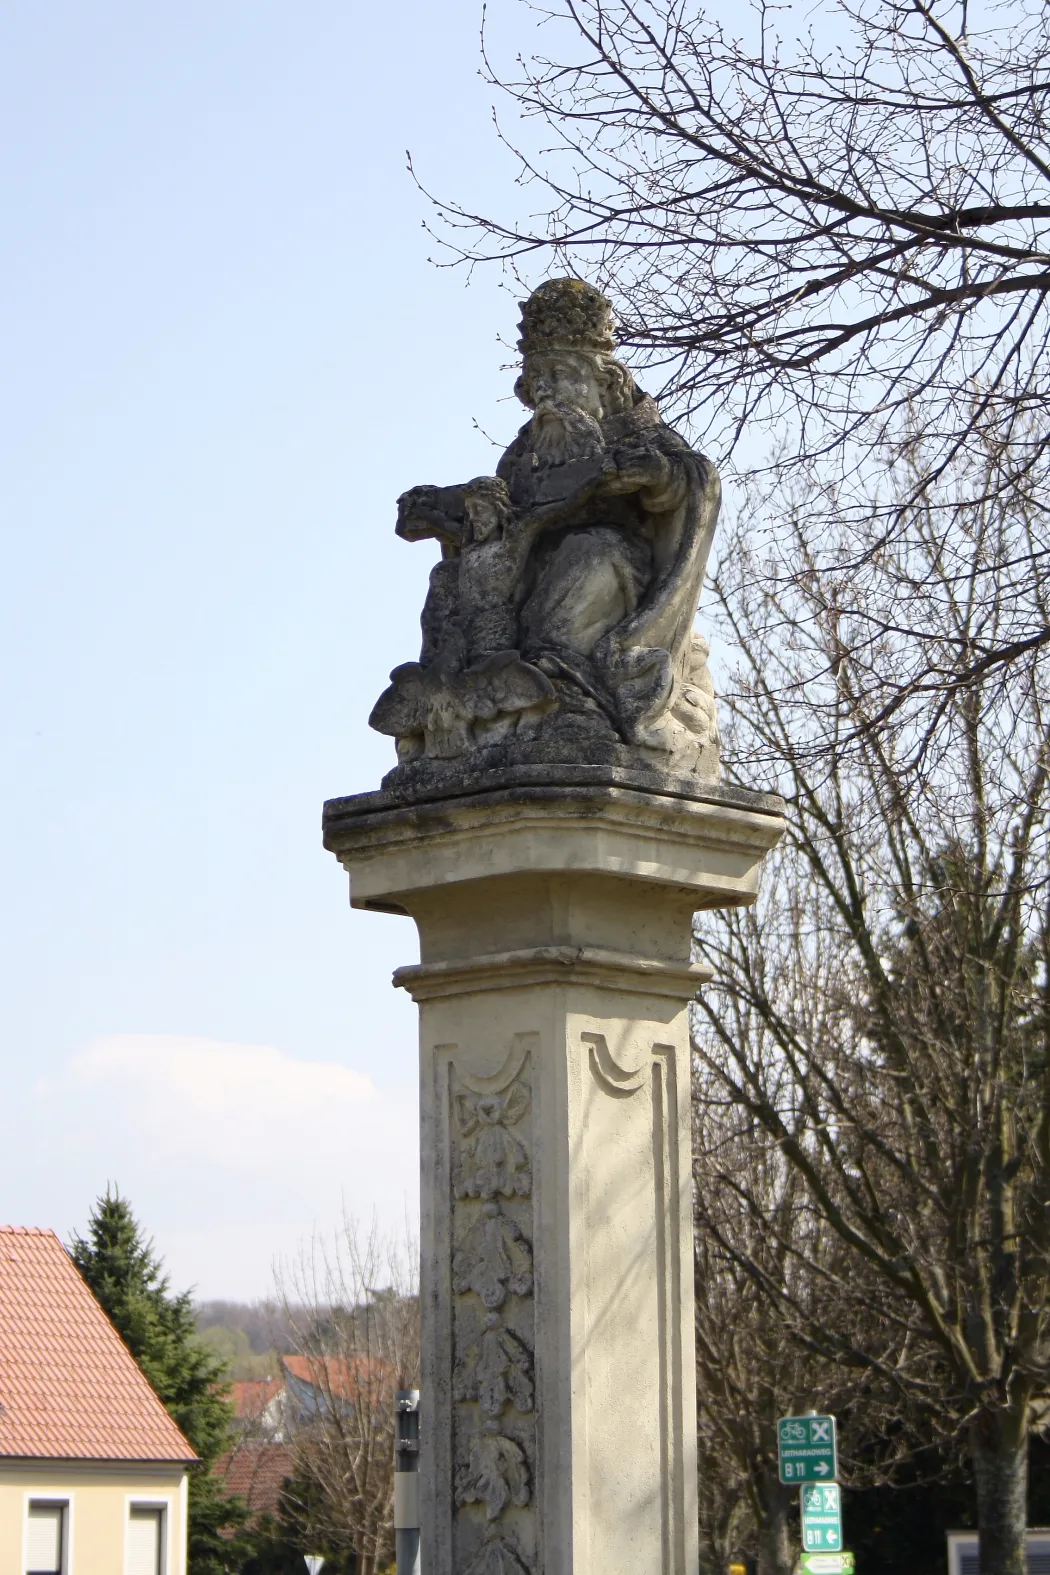 Image of Burgenland